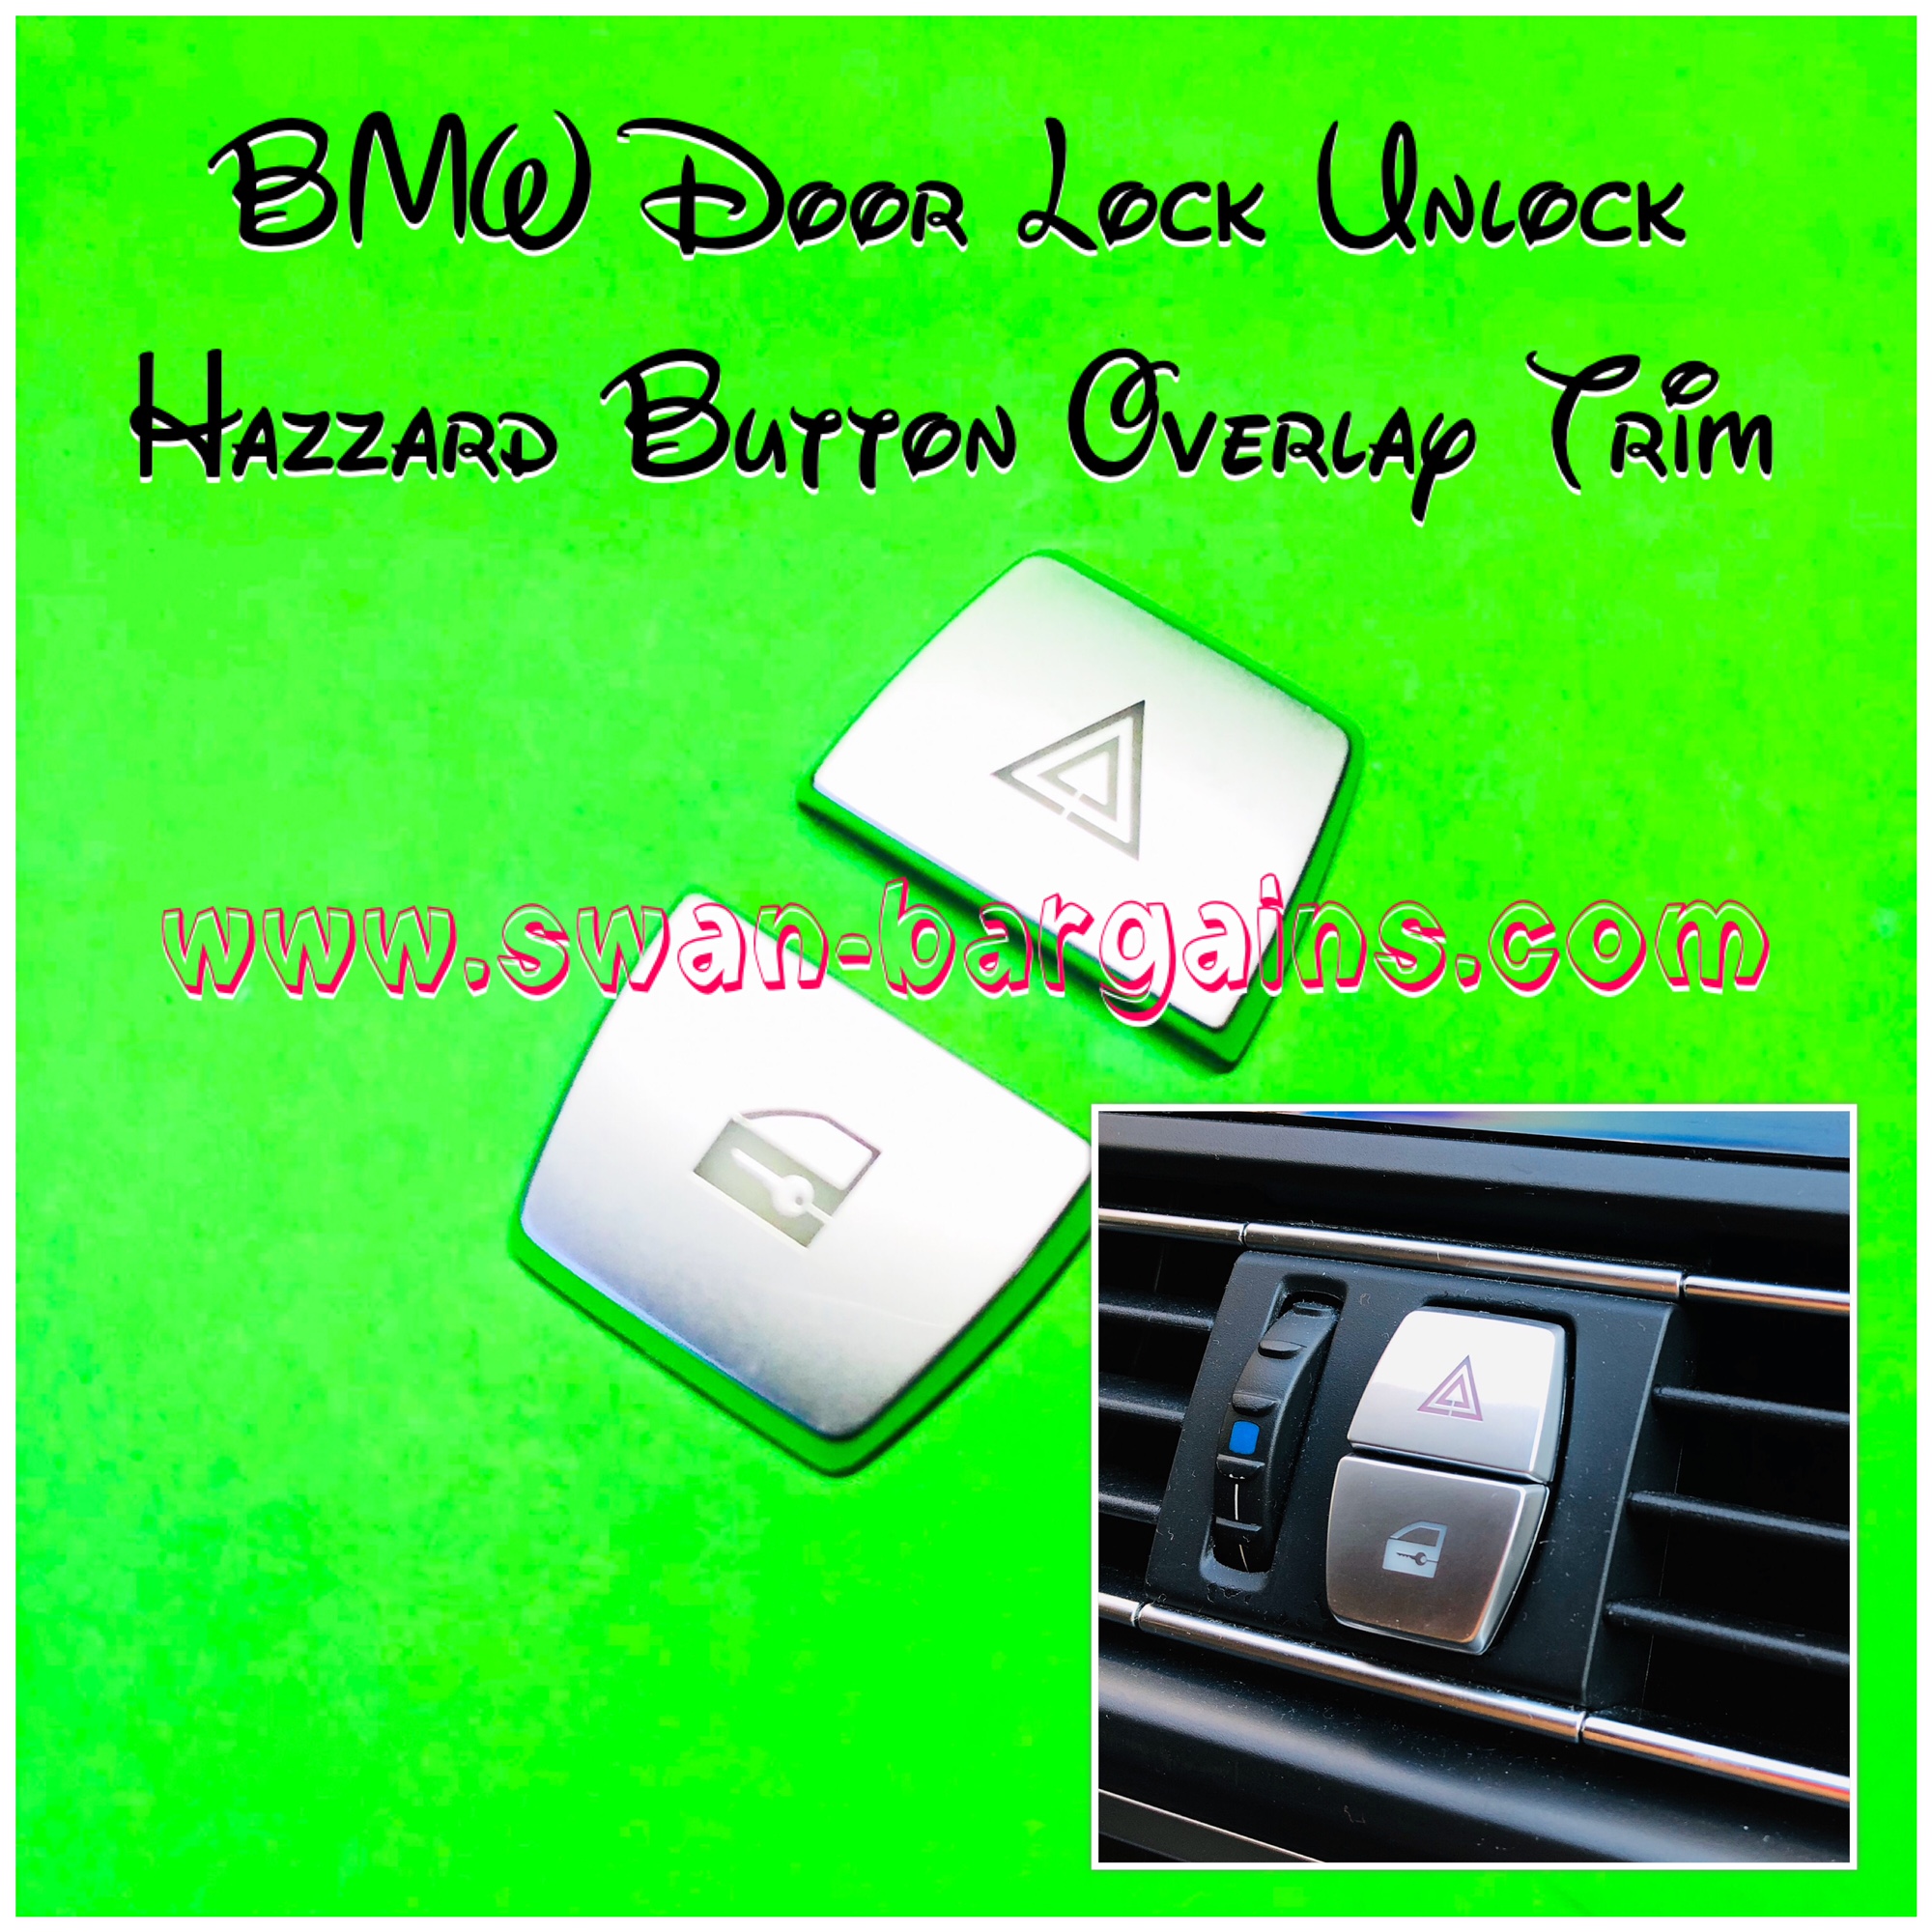 BMW Hazzard Door Lock Unlock Button Trim Singapore